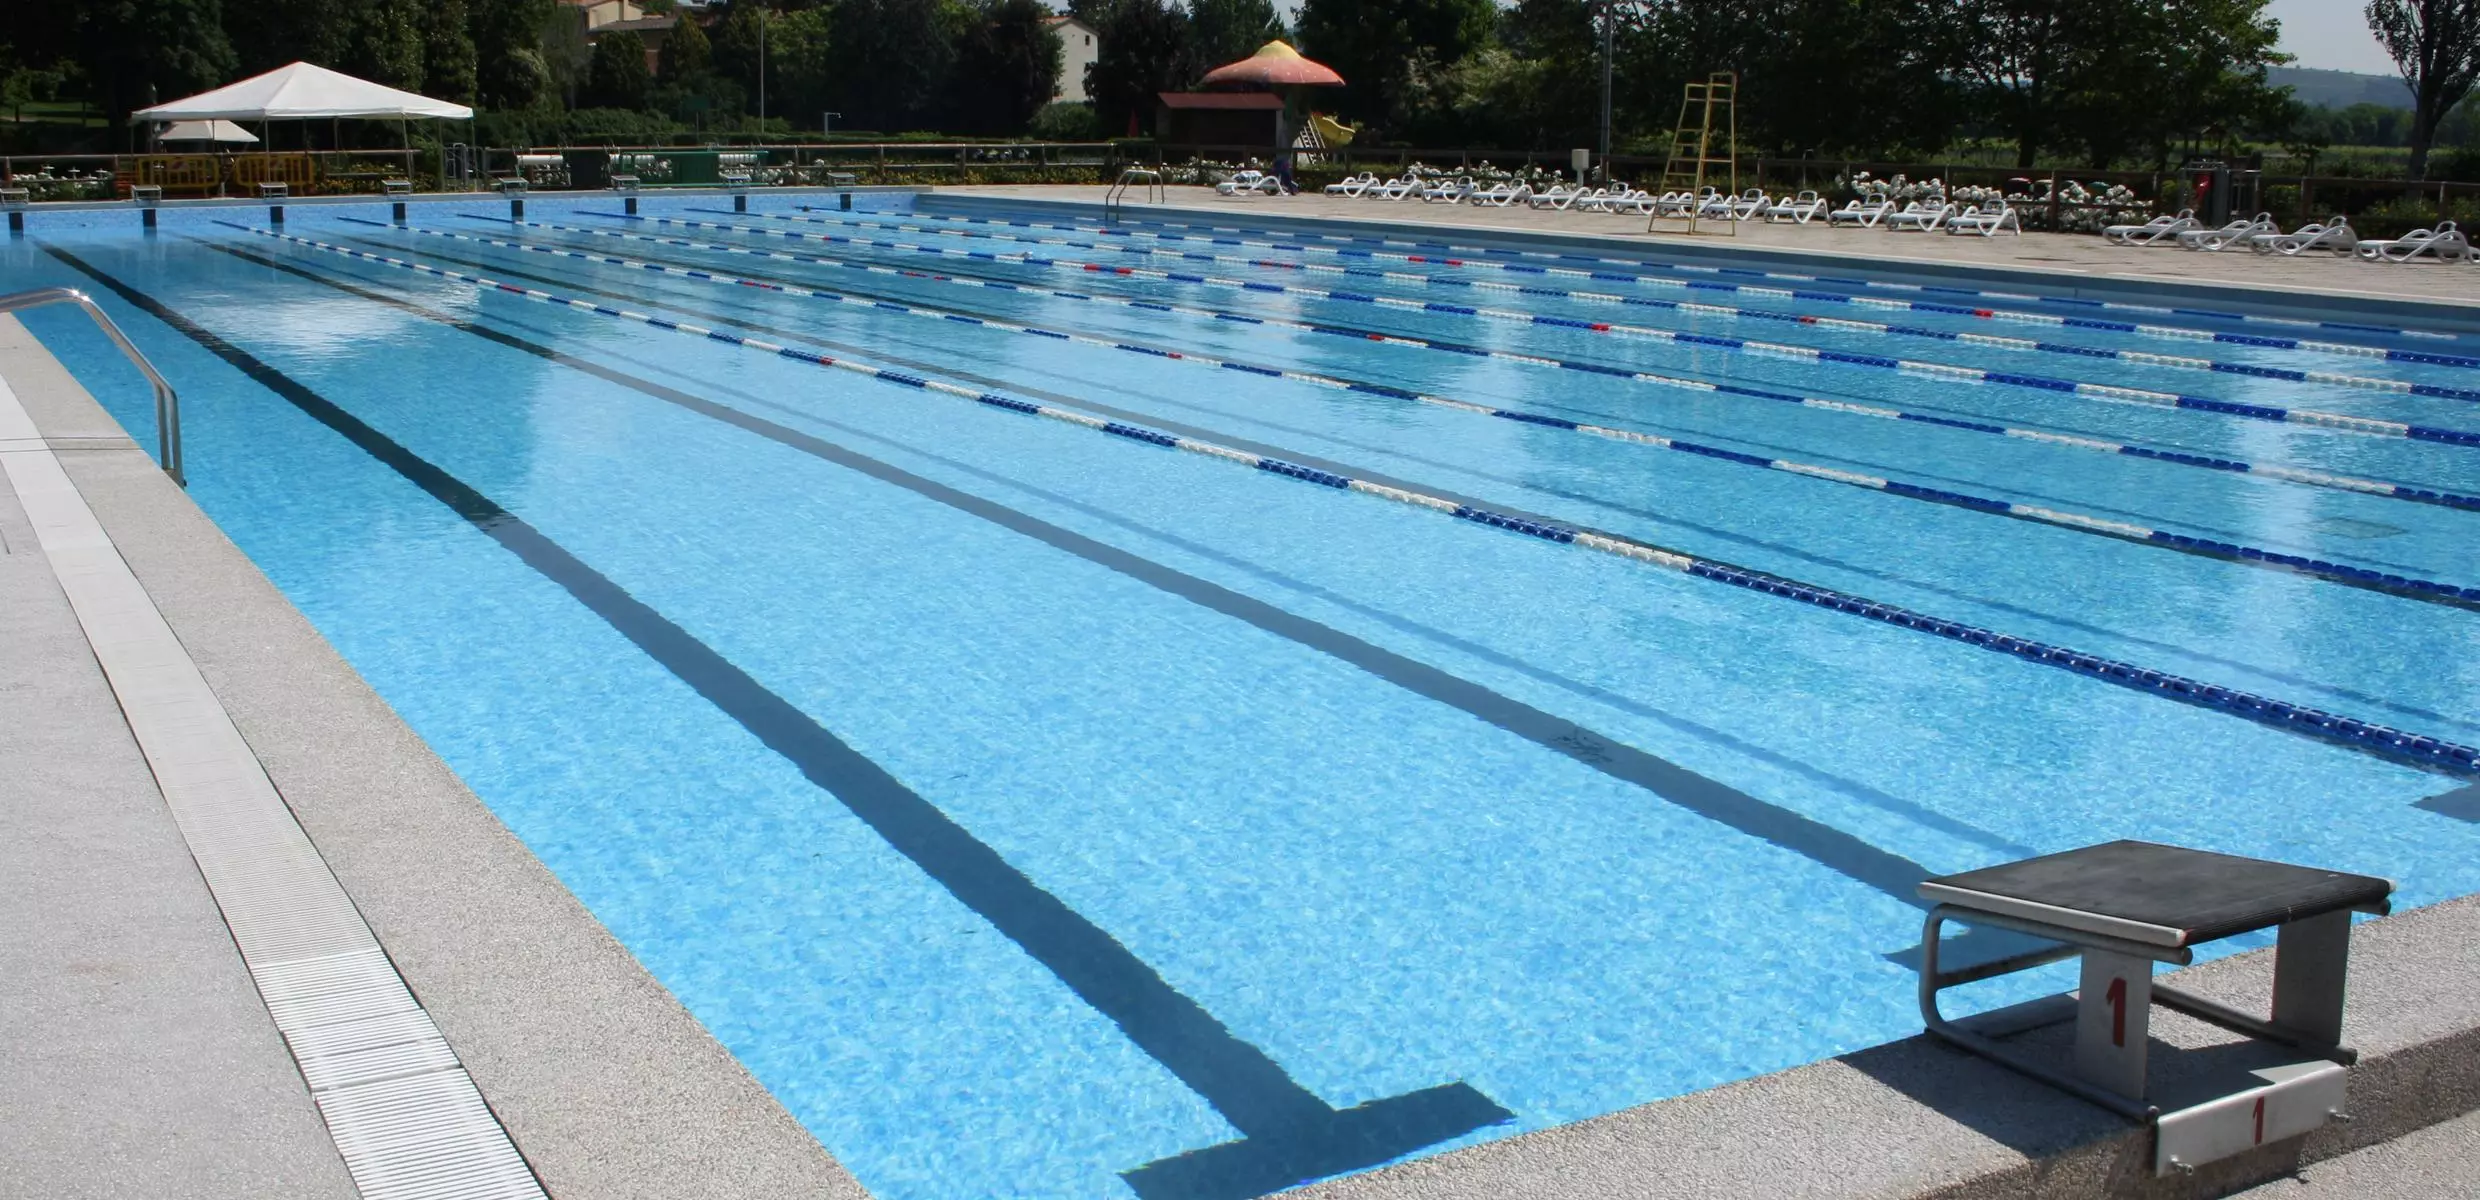 Bazénová fólia Sopremapool Design - Sky Blue 1,5mm